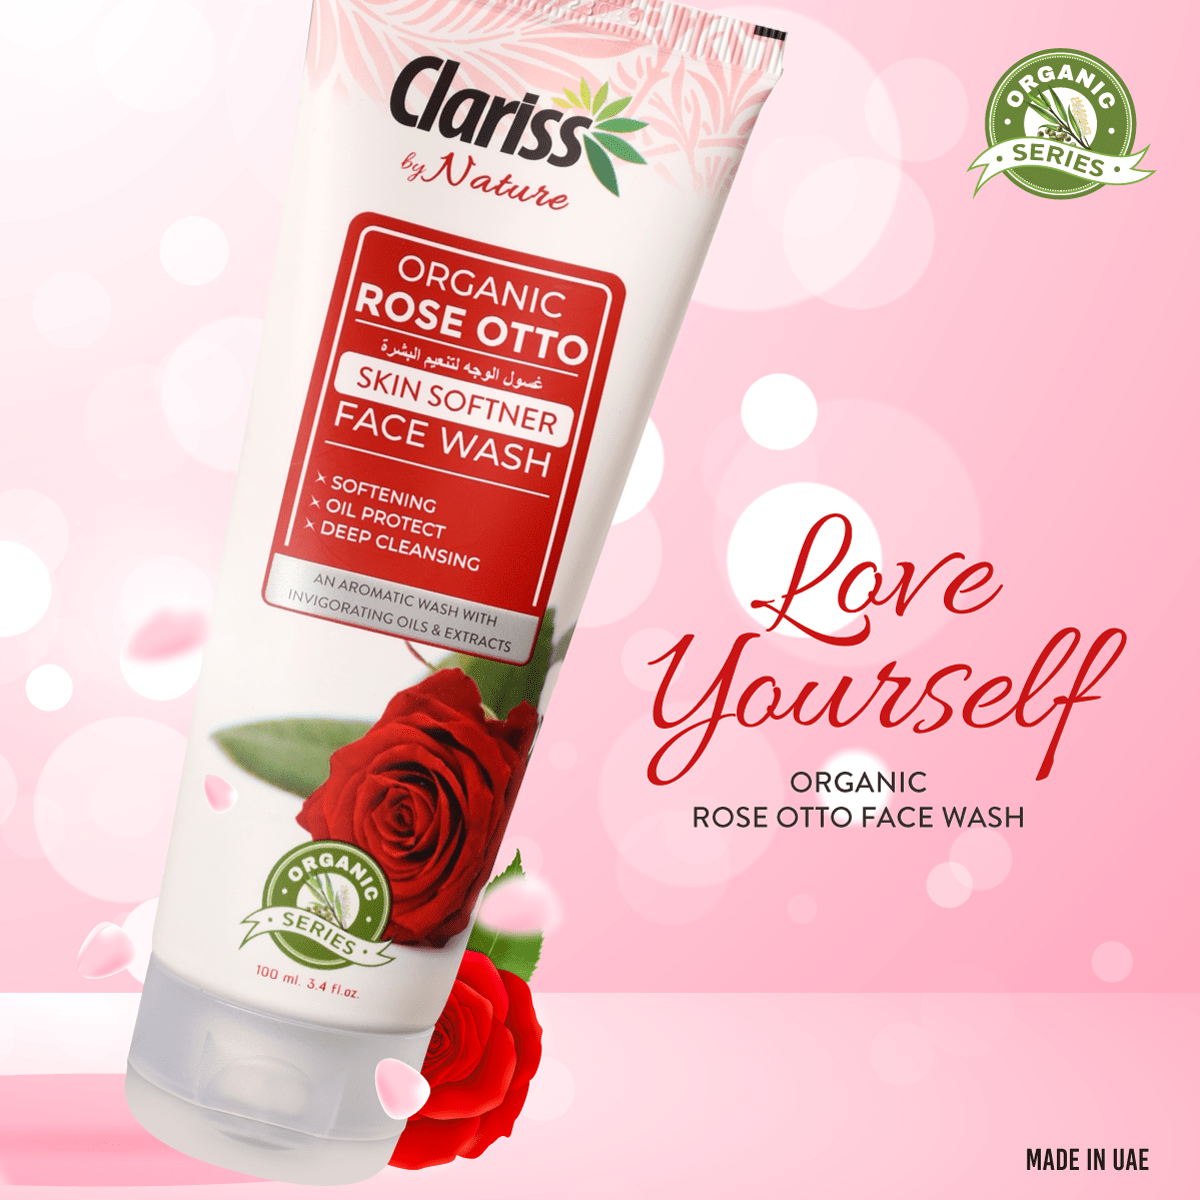 clariss rose otto organic face wash